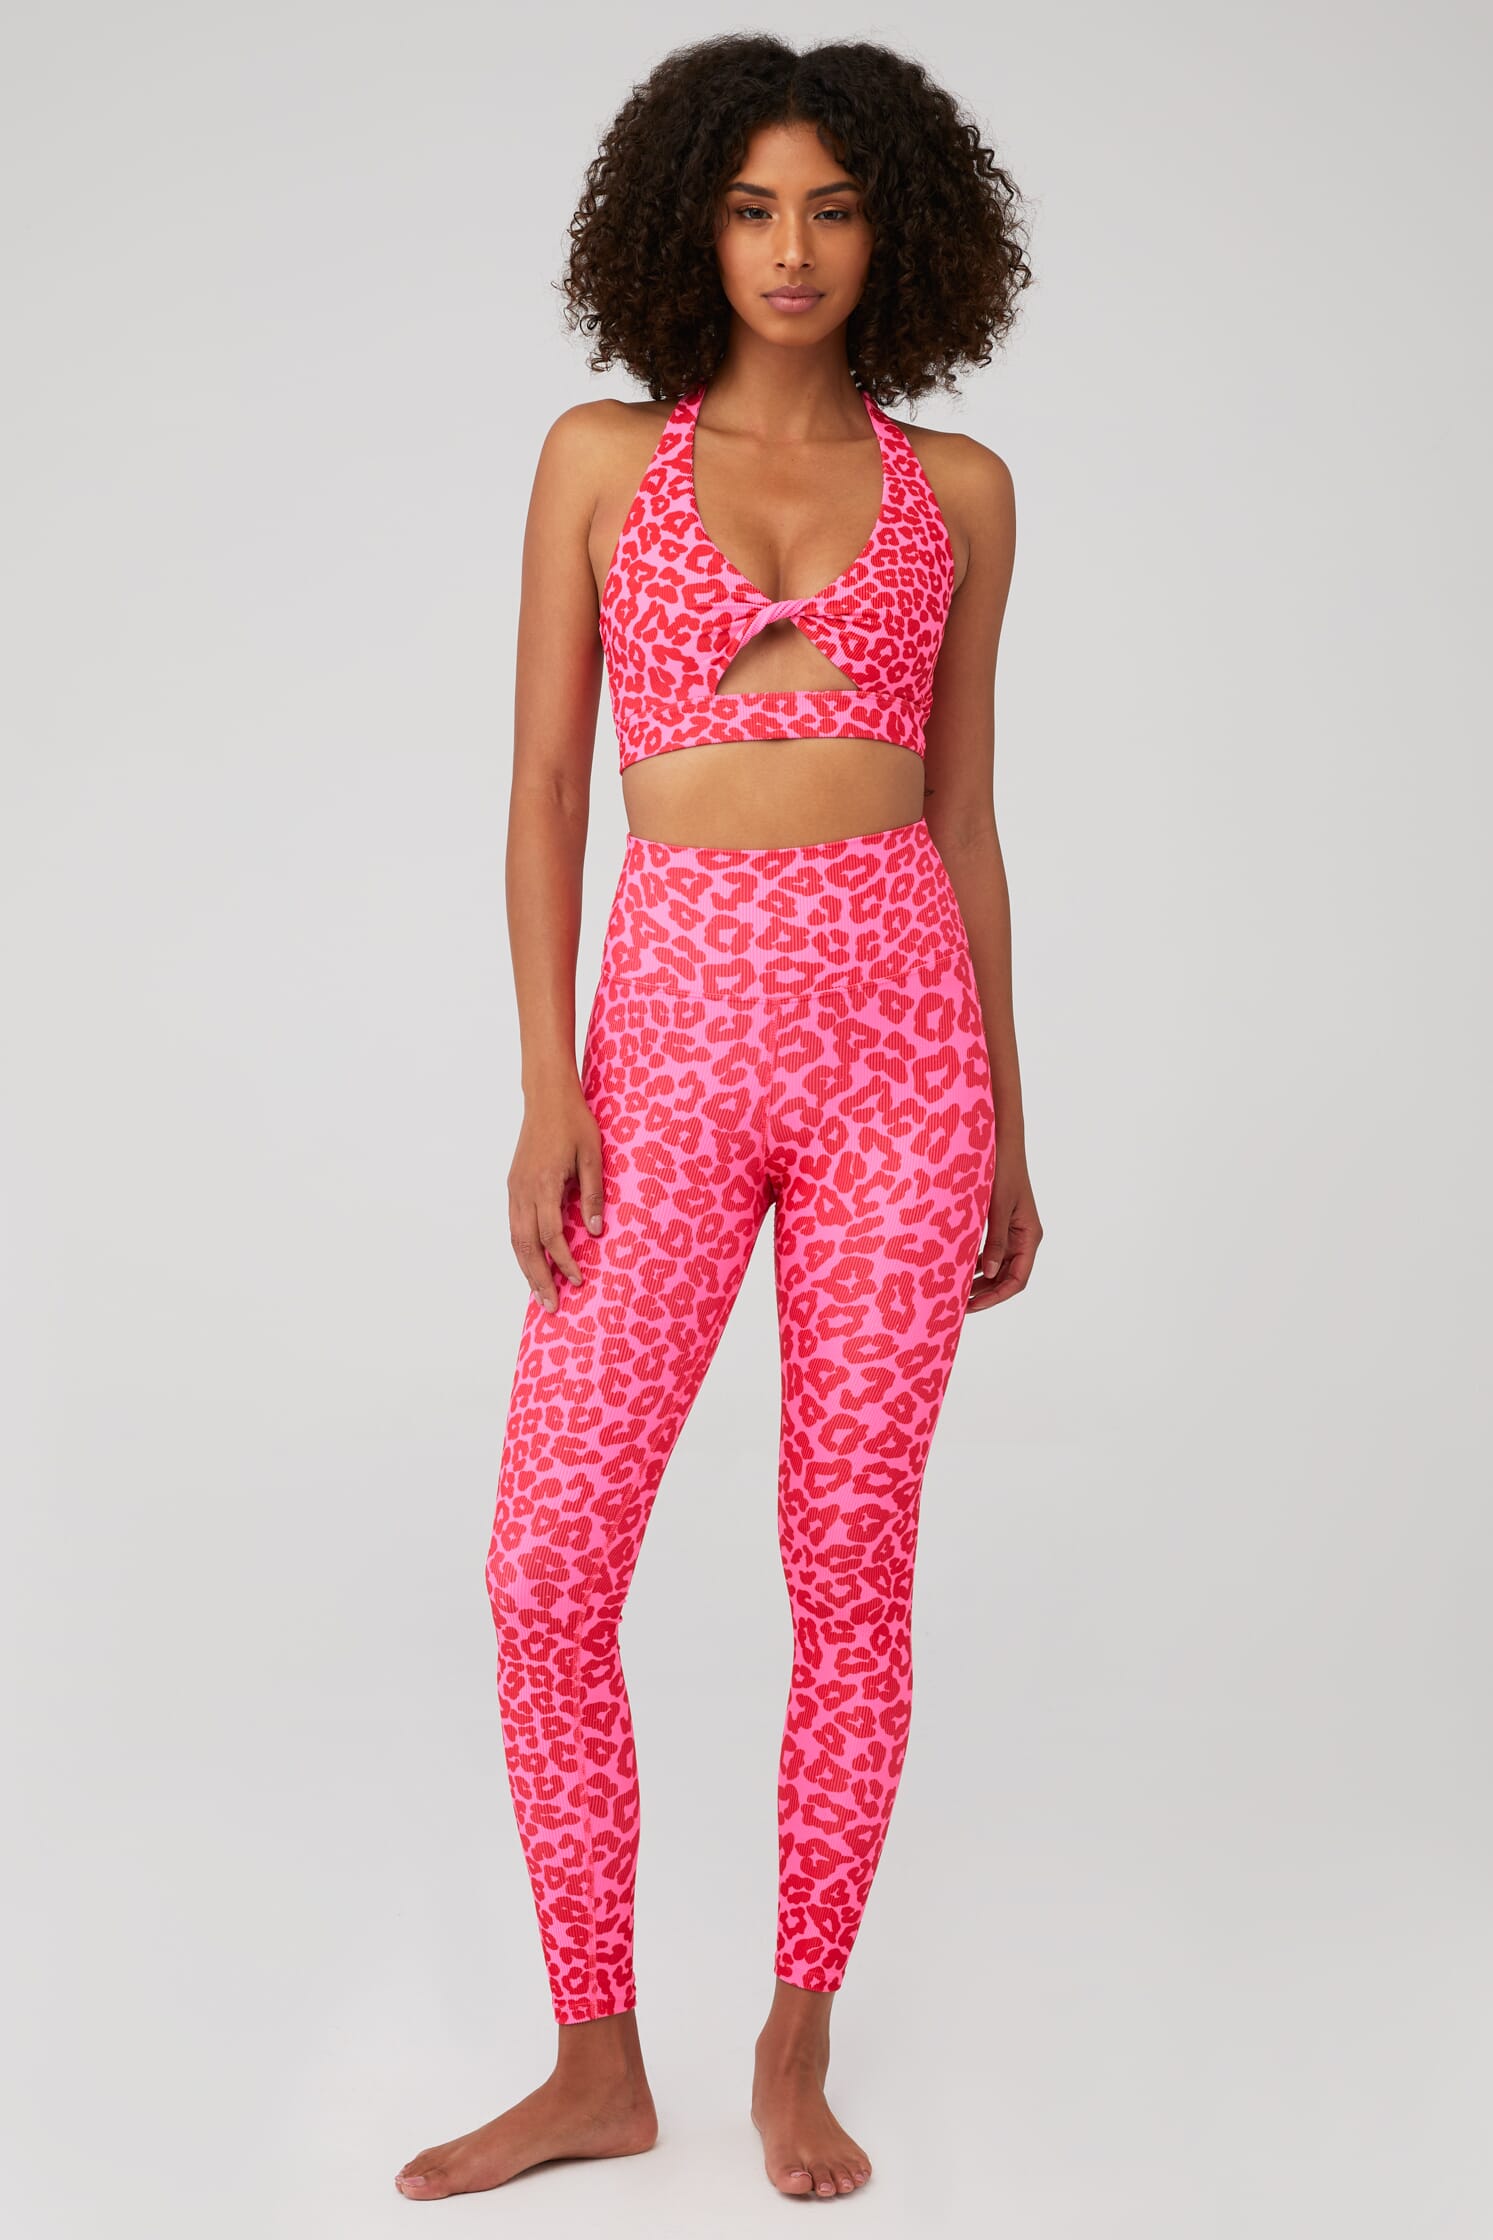 Leopard-print high-rise leggings in pink - The Upside